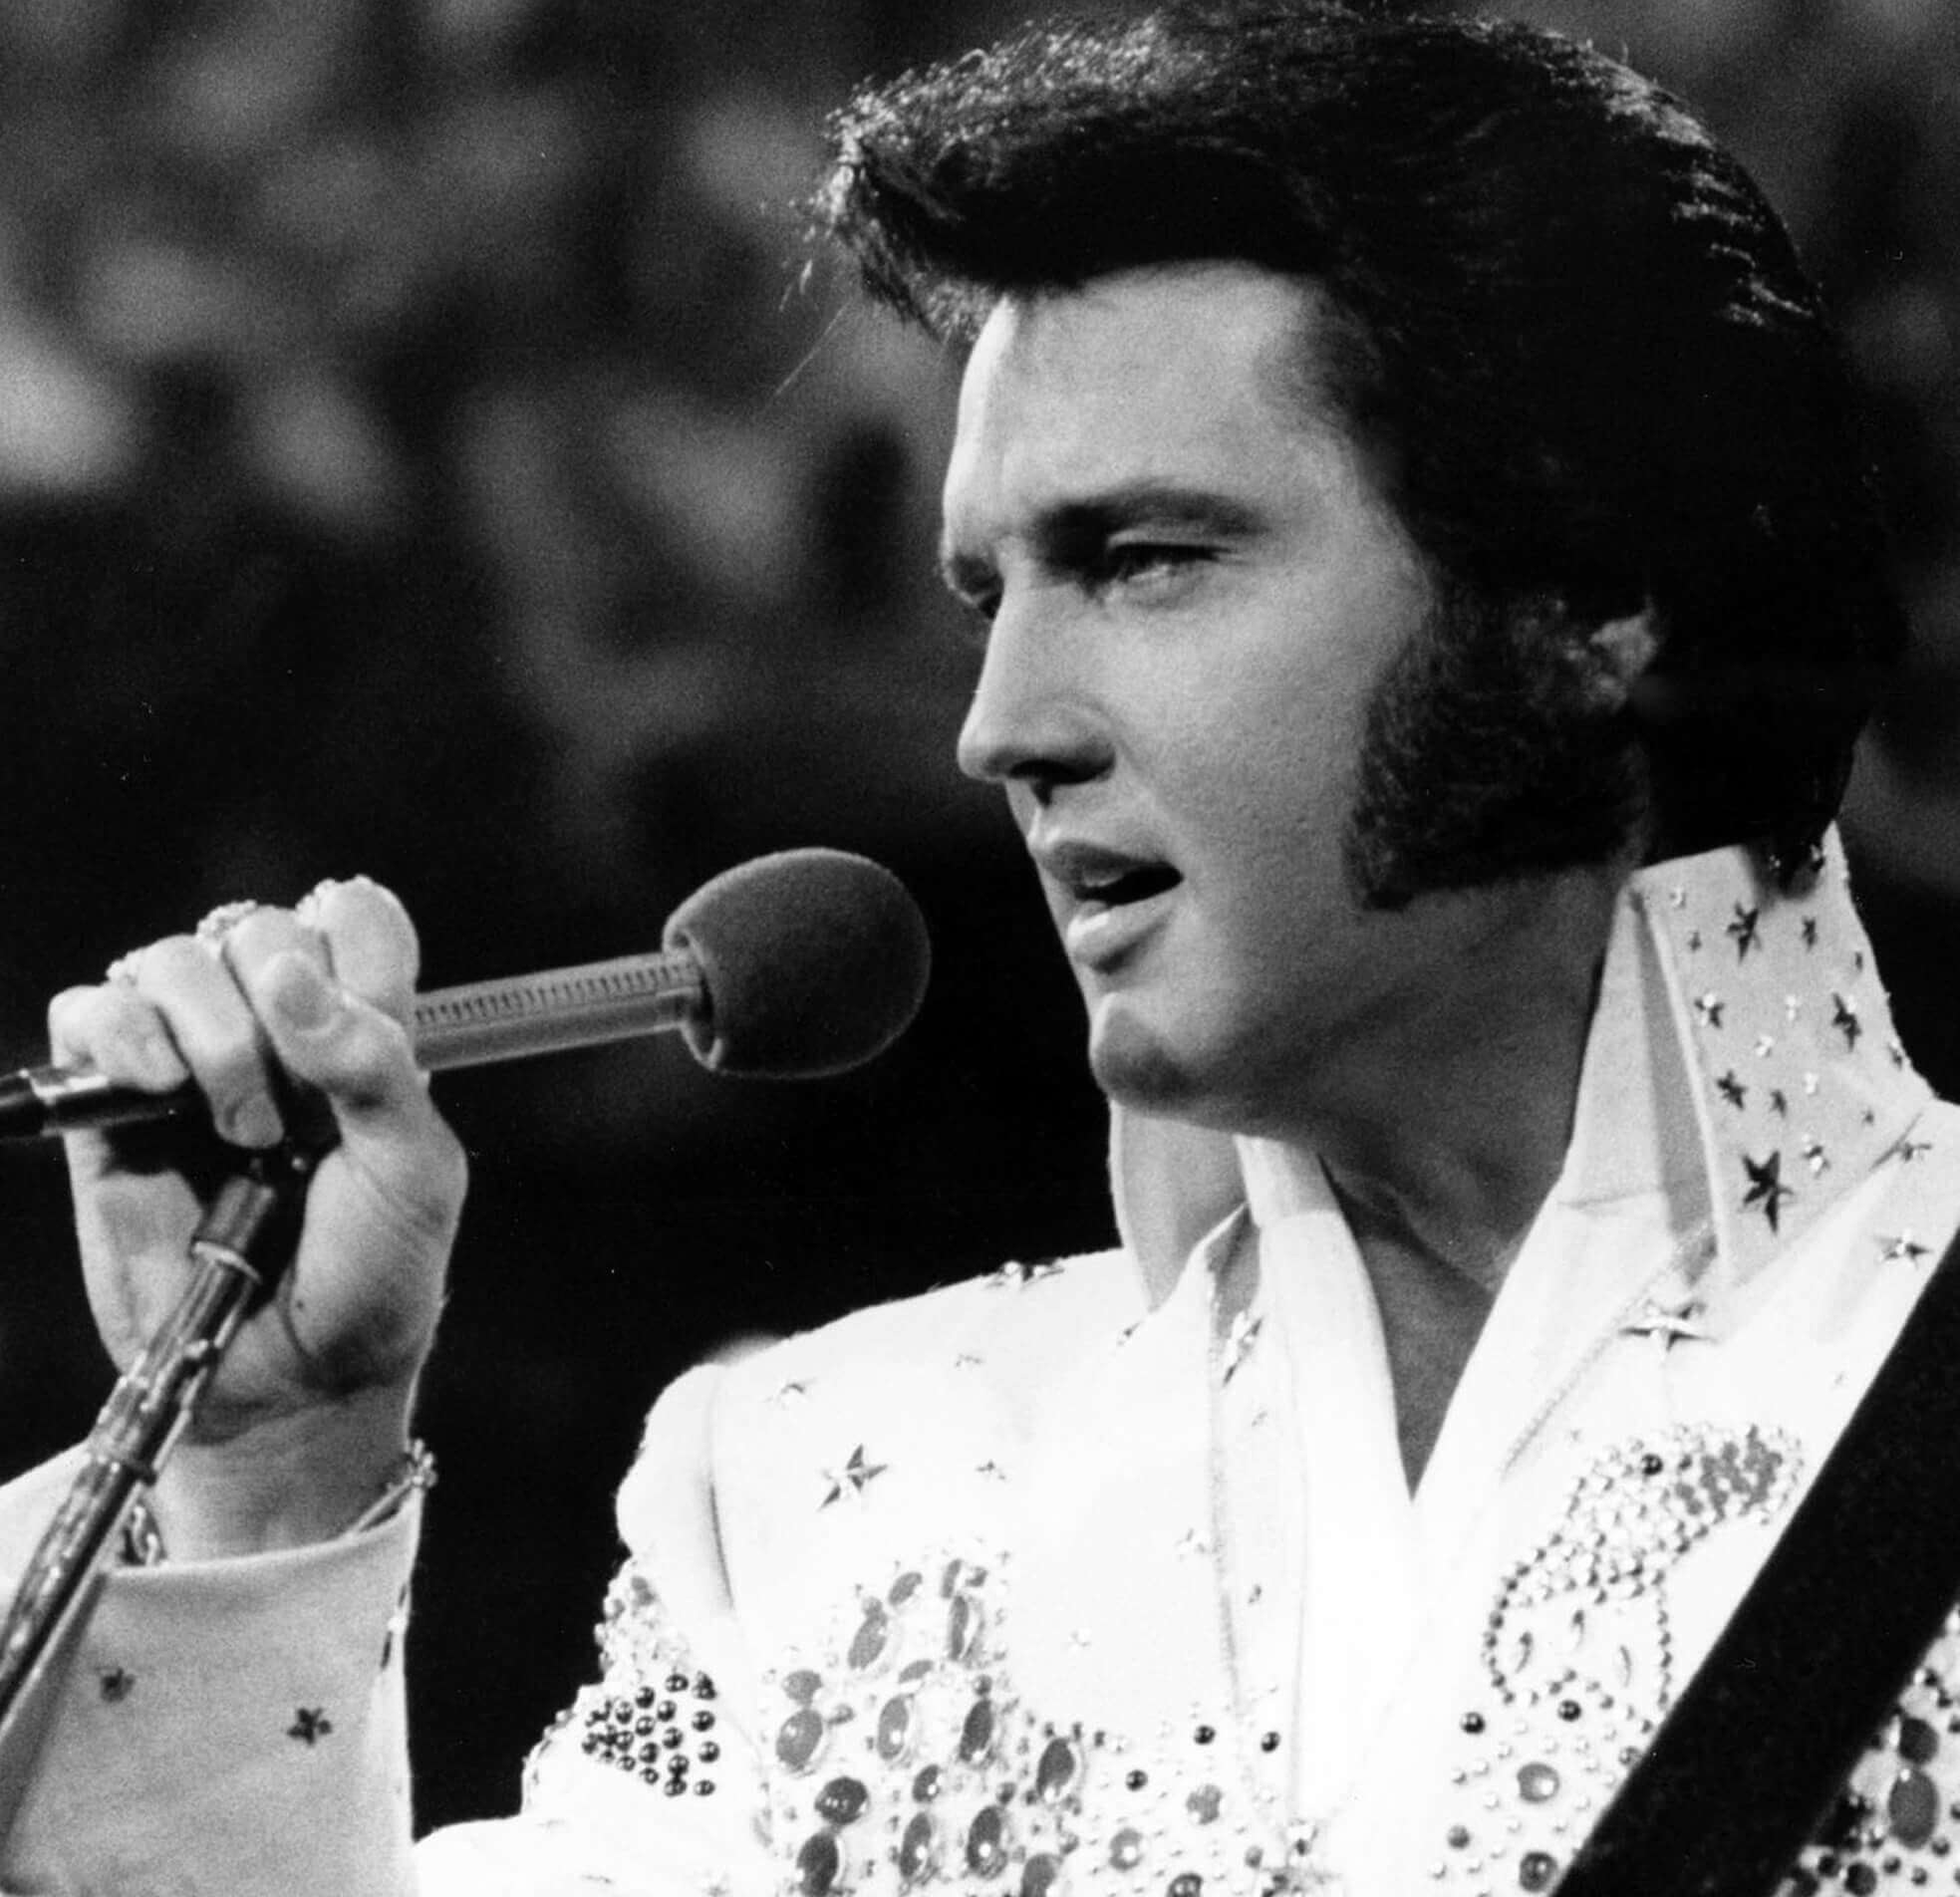 "Suspicious Minds" singer Elvis Presley holding a microphone